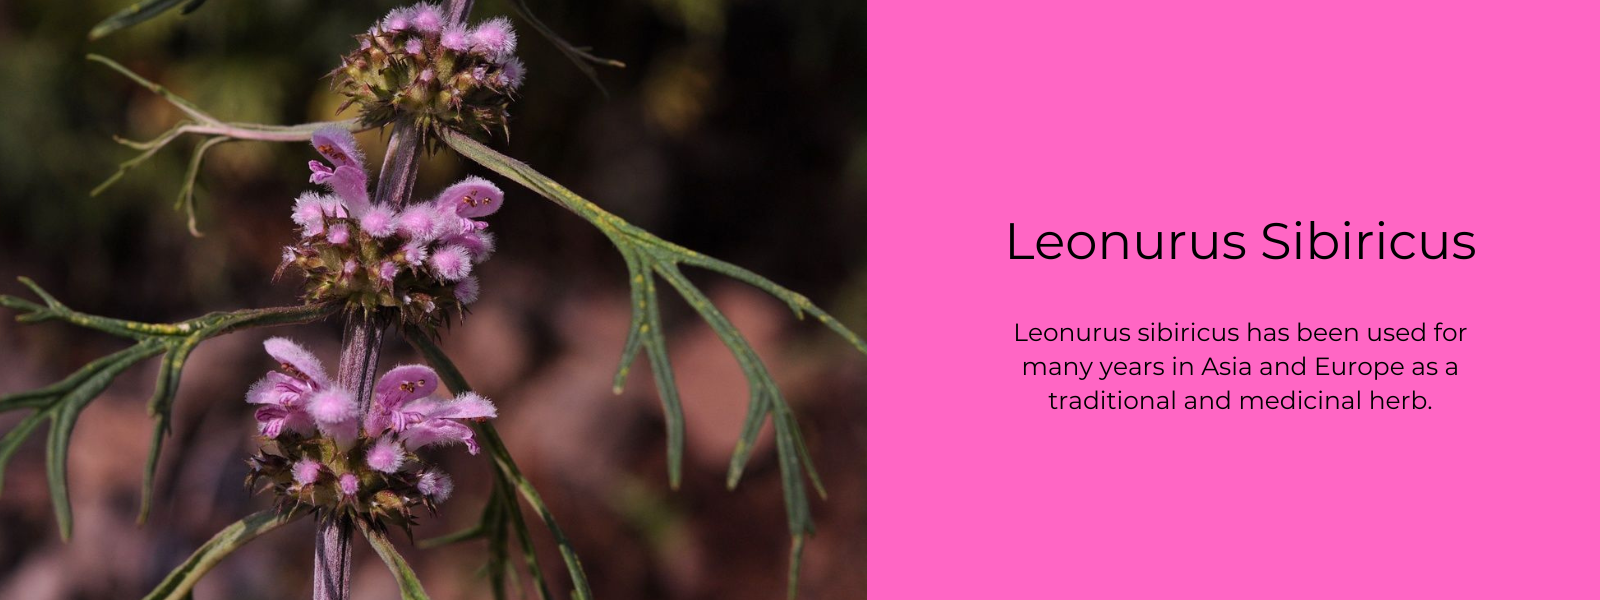 Leonurus Sibiricus - Health Benefits, Uses and Important Facts